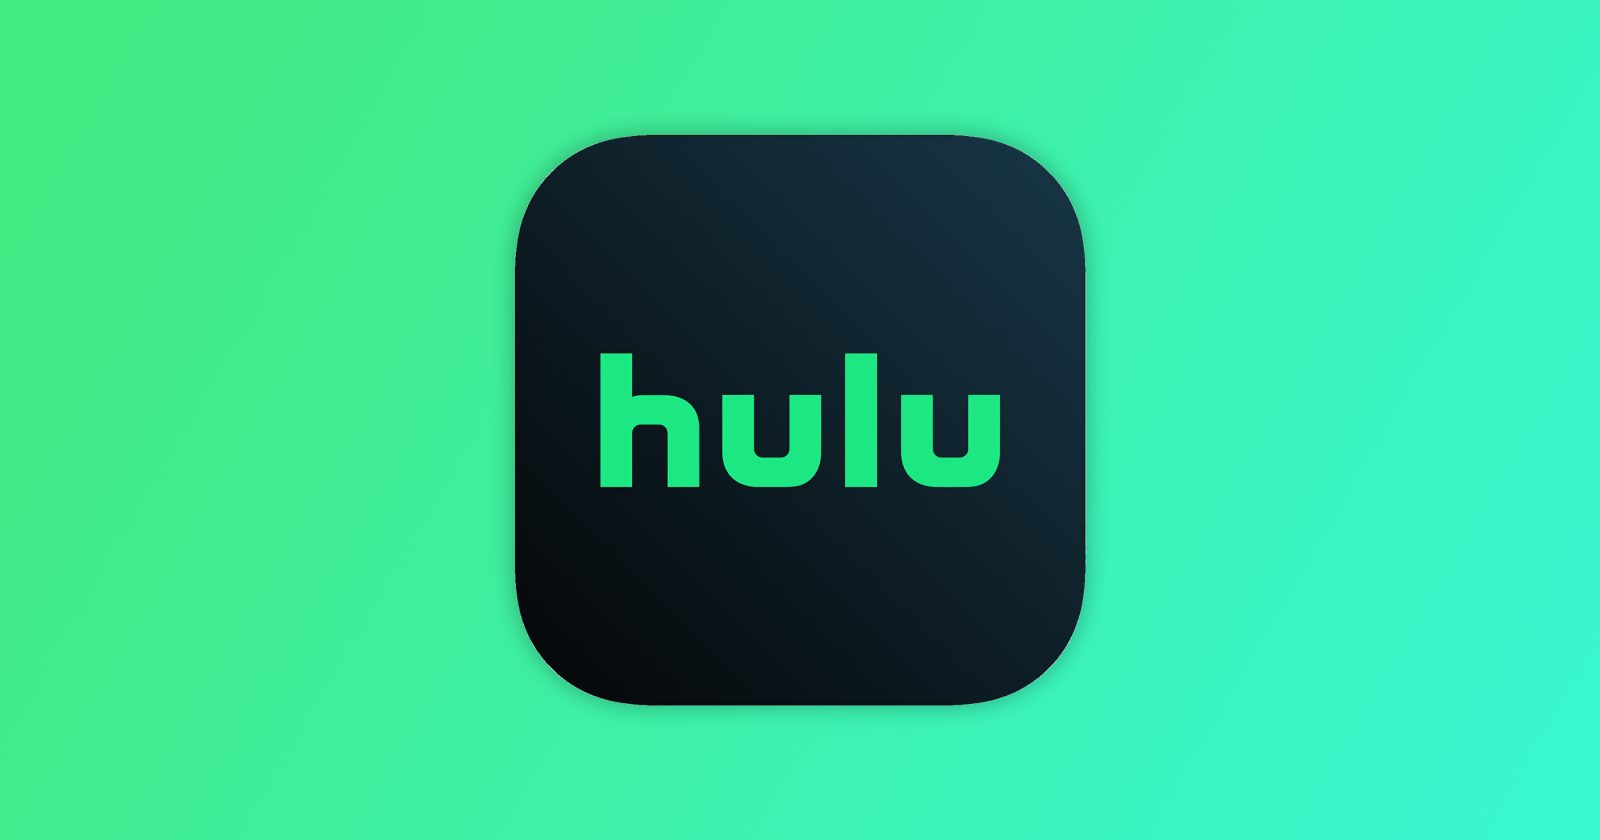 Hulu adds SharePlay for iPhone and iPad users - 9to5Mac